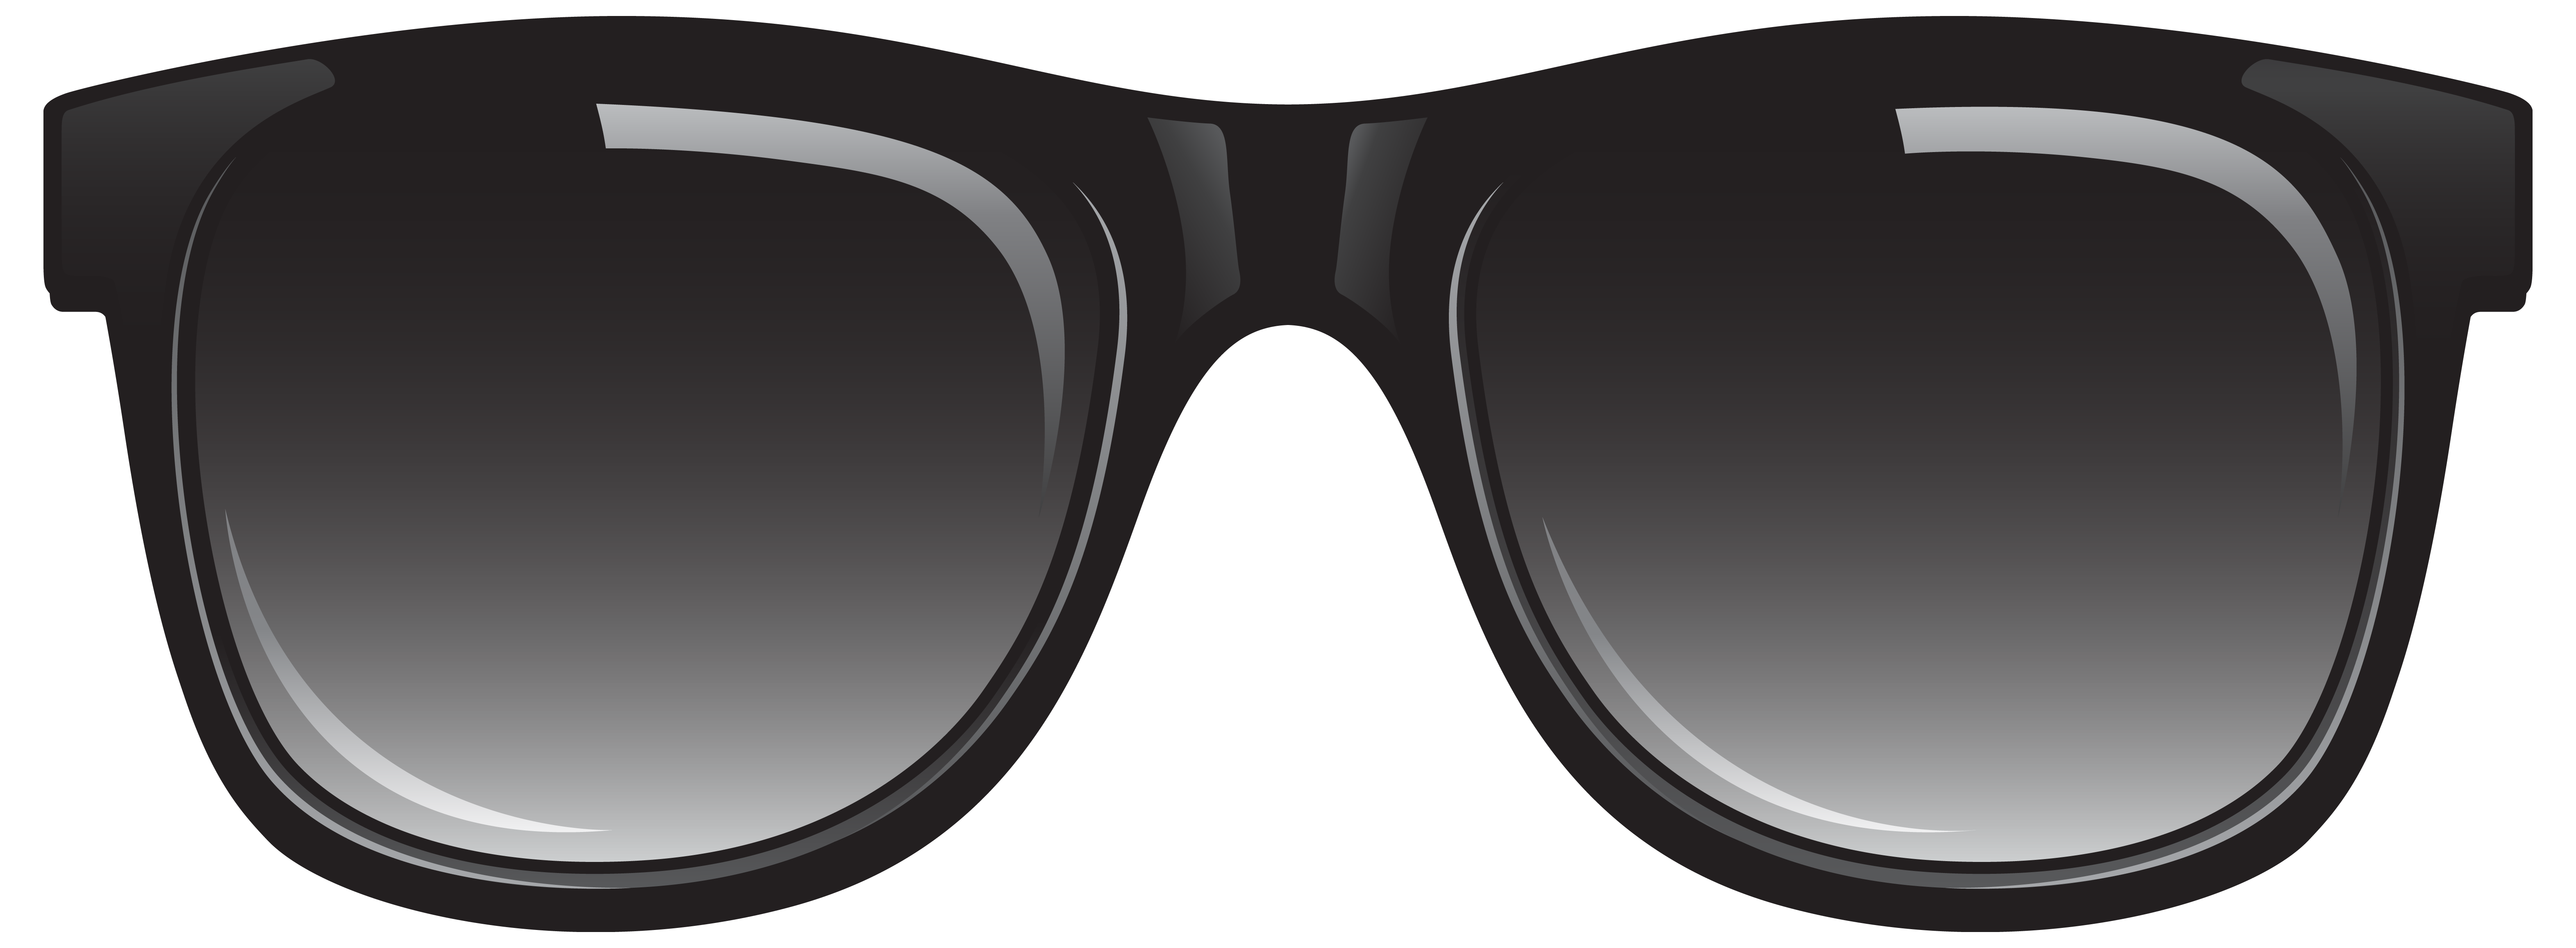 Black sunglasses clipart image. Glasses vector png